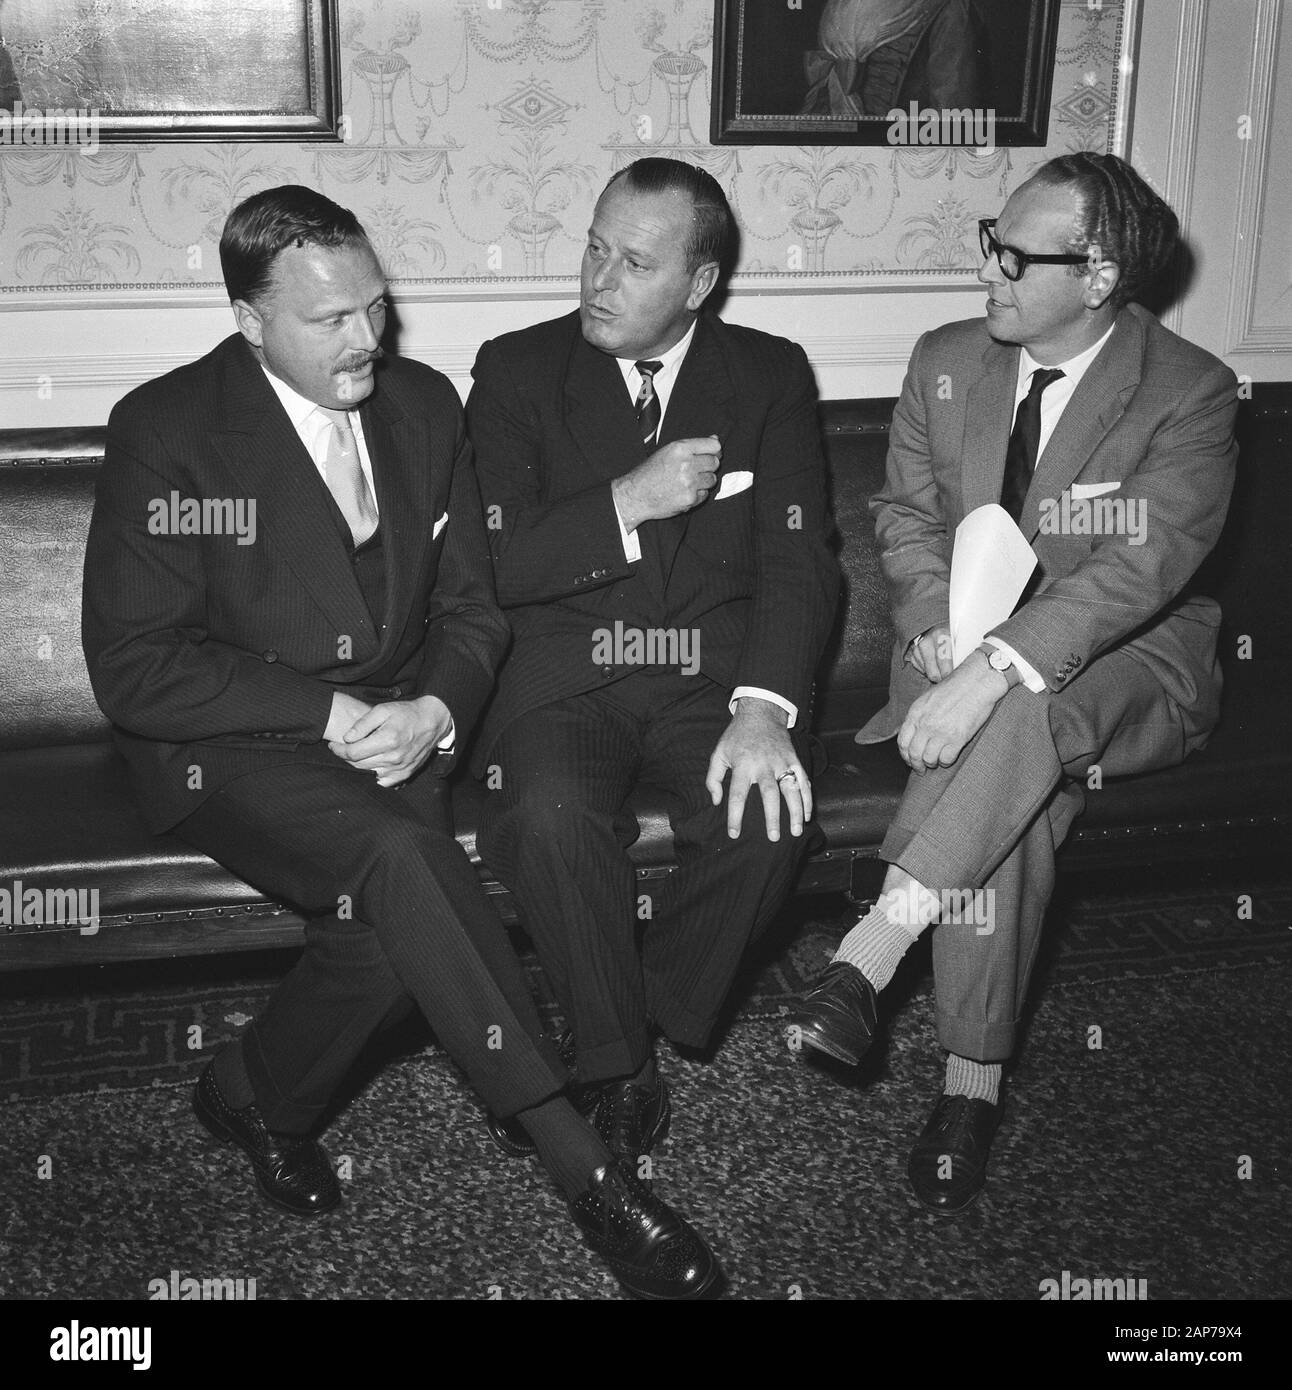 Debate in Lower Chamber, v.l.n.r. mr. Berkhouwer, mr. Blaisse, mr. Vrolijk Datay: 6 july 1960 Location: The Hague, Zuid-Holland Keywords: MPs, politicians, political Person name: Berkhouwer, Blaisse Stock Photo